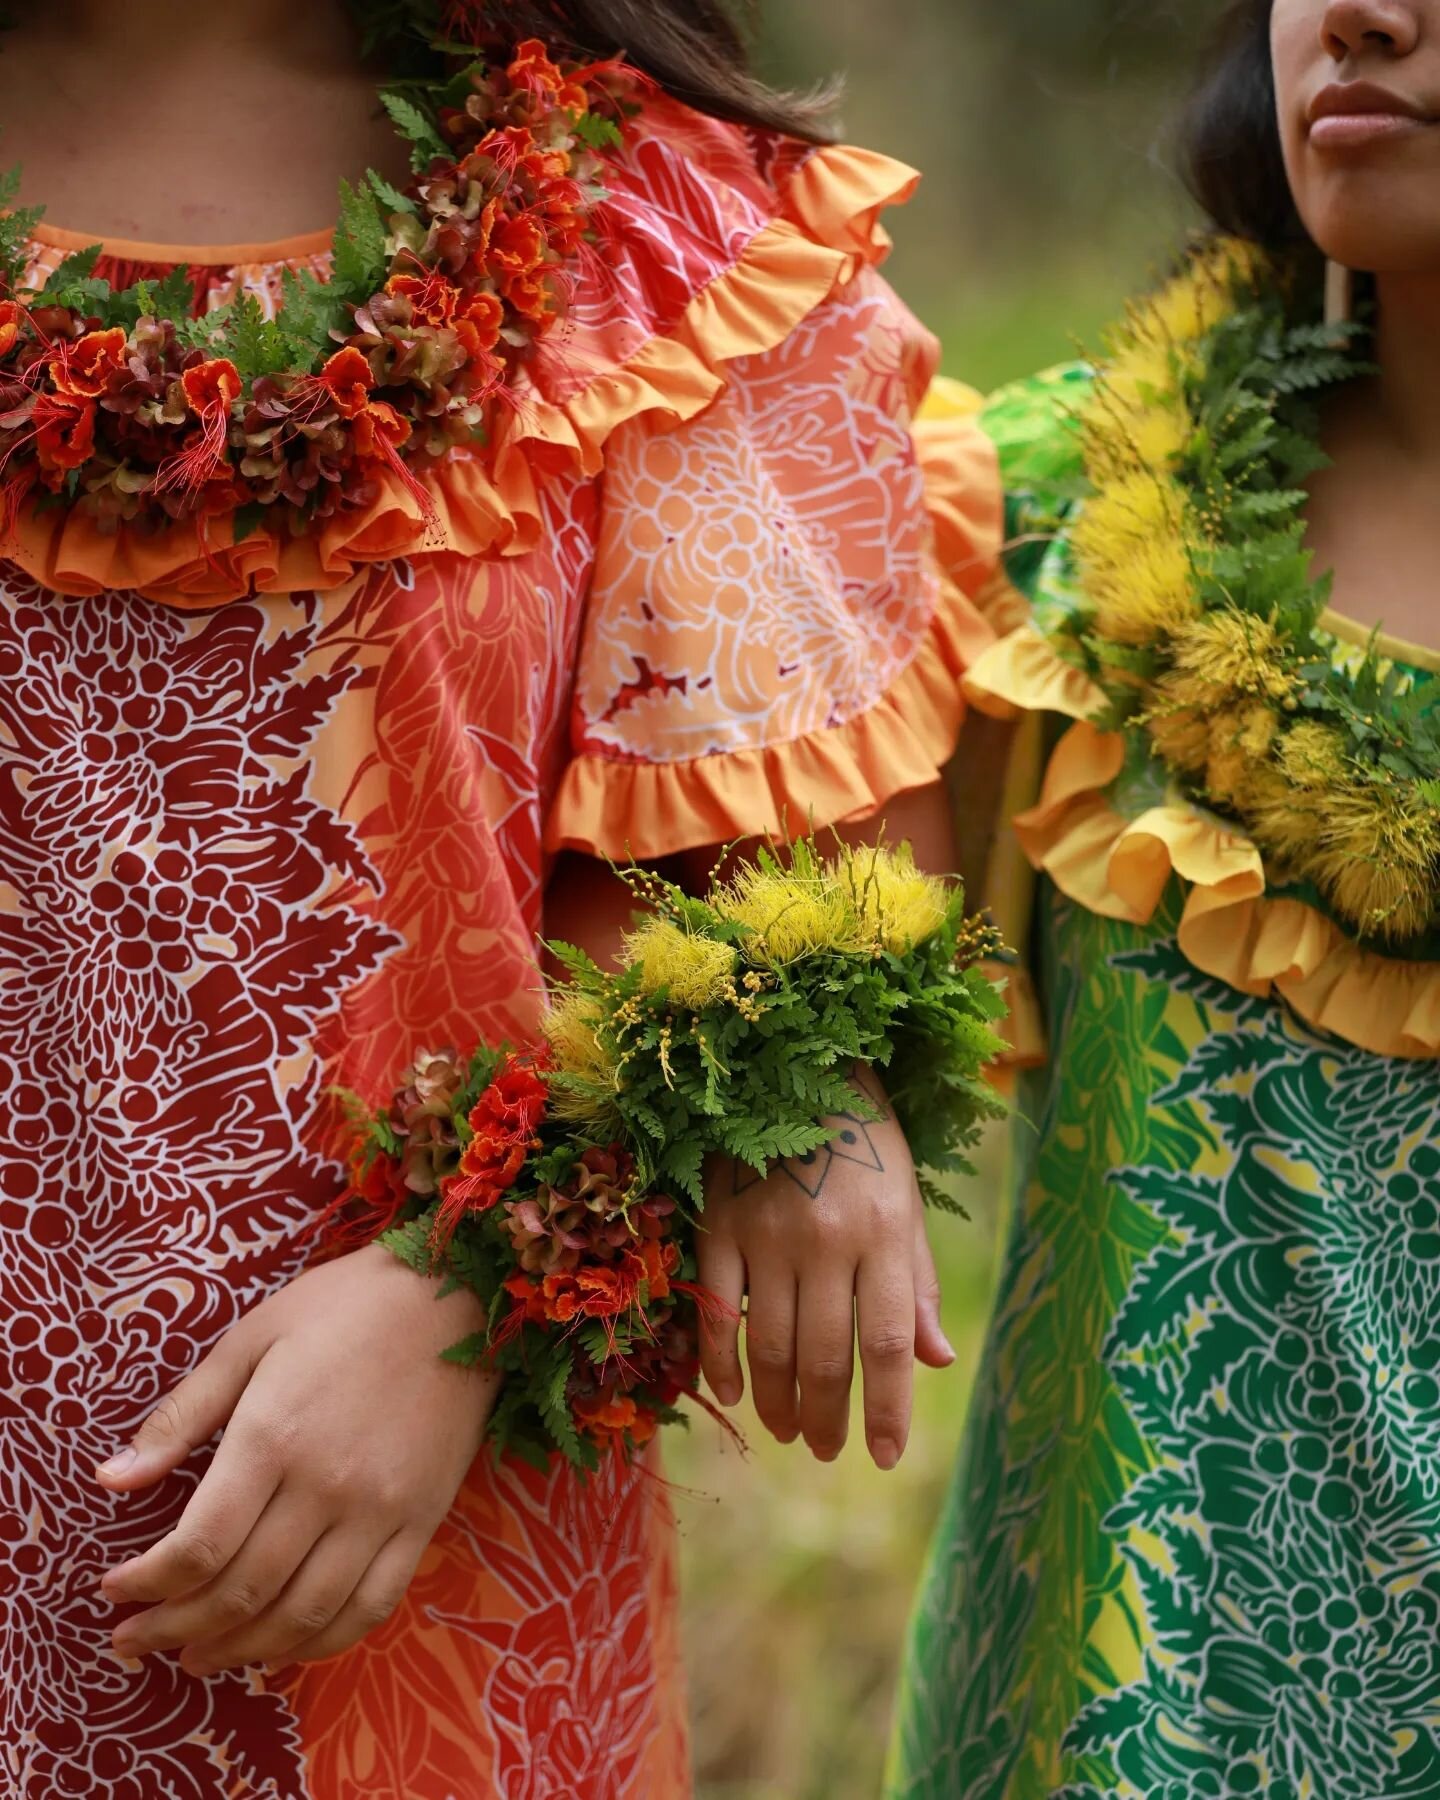 For a traditional mu&rsquo;u mu&rsquo;u , pair it with a lei made from Hawaiian flowers.
The classic mu&rsquo;u mu&rsquo;u  becomes more beautiful and elegant.

#muumuu
#palakamuumuu
#muumuudress
#muumuuday
#muumuulove
#hawaiidress
#hawaiiandress
#ha